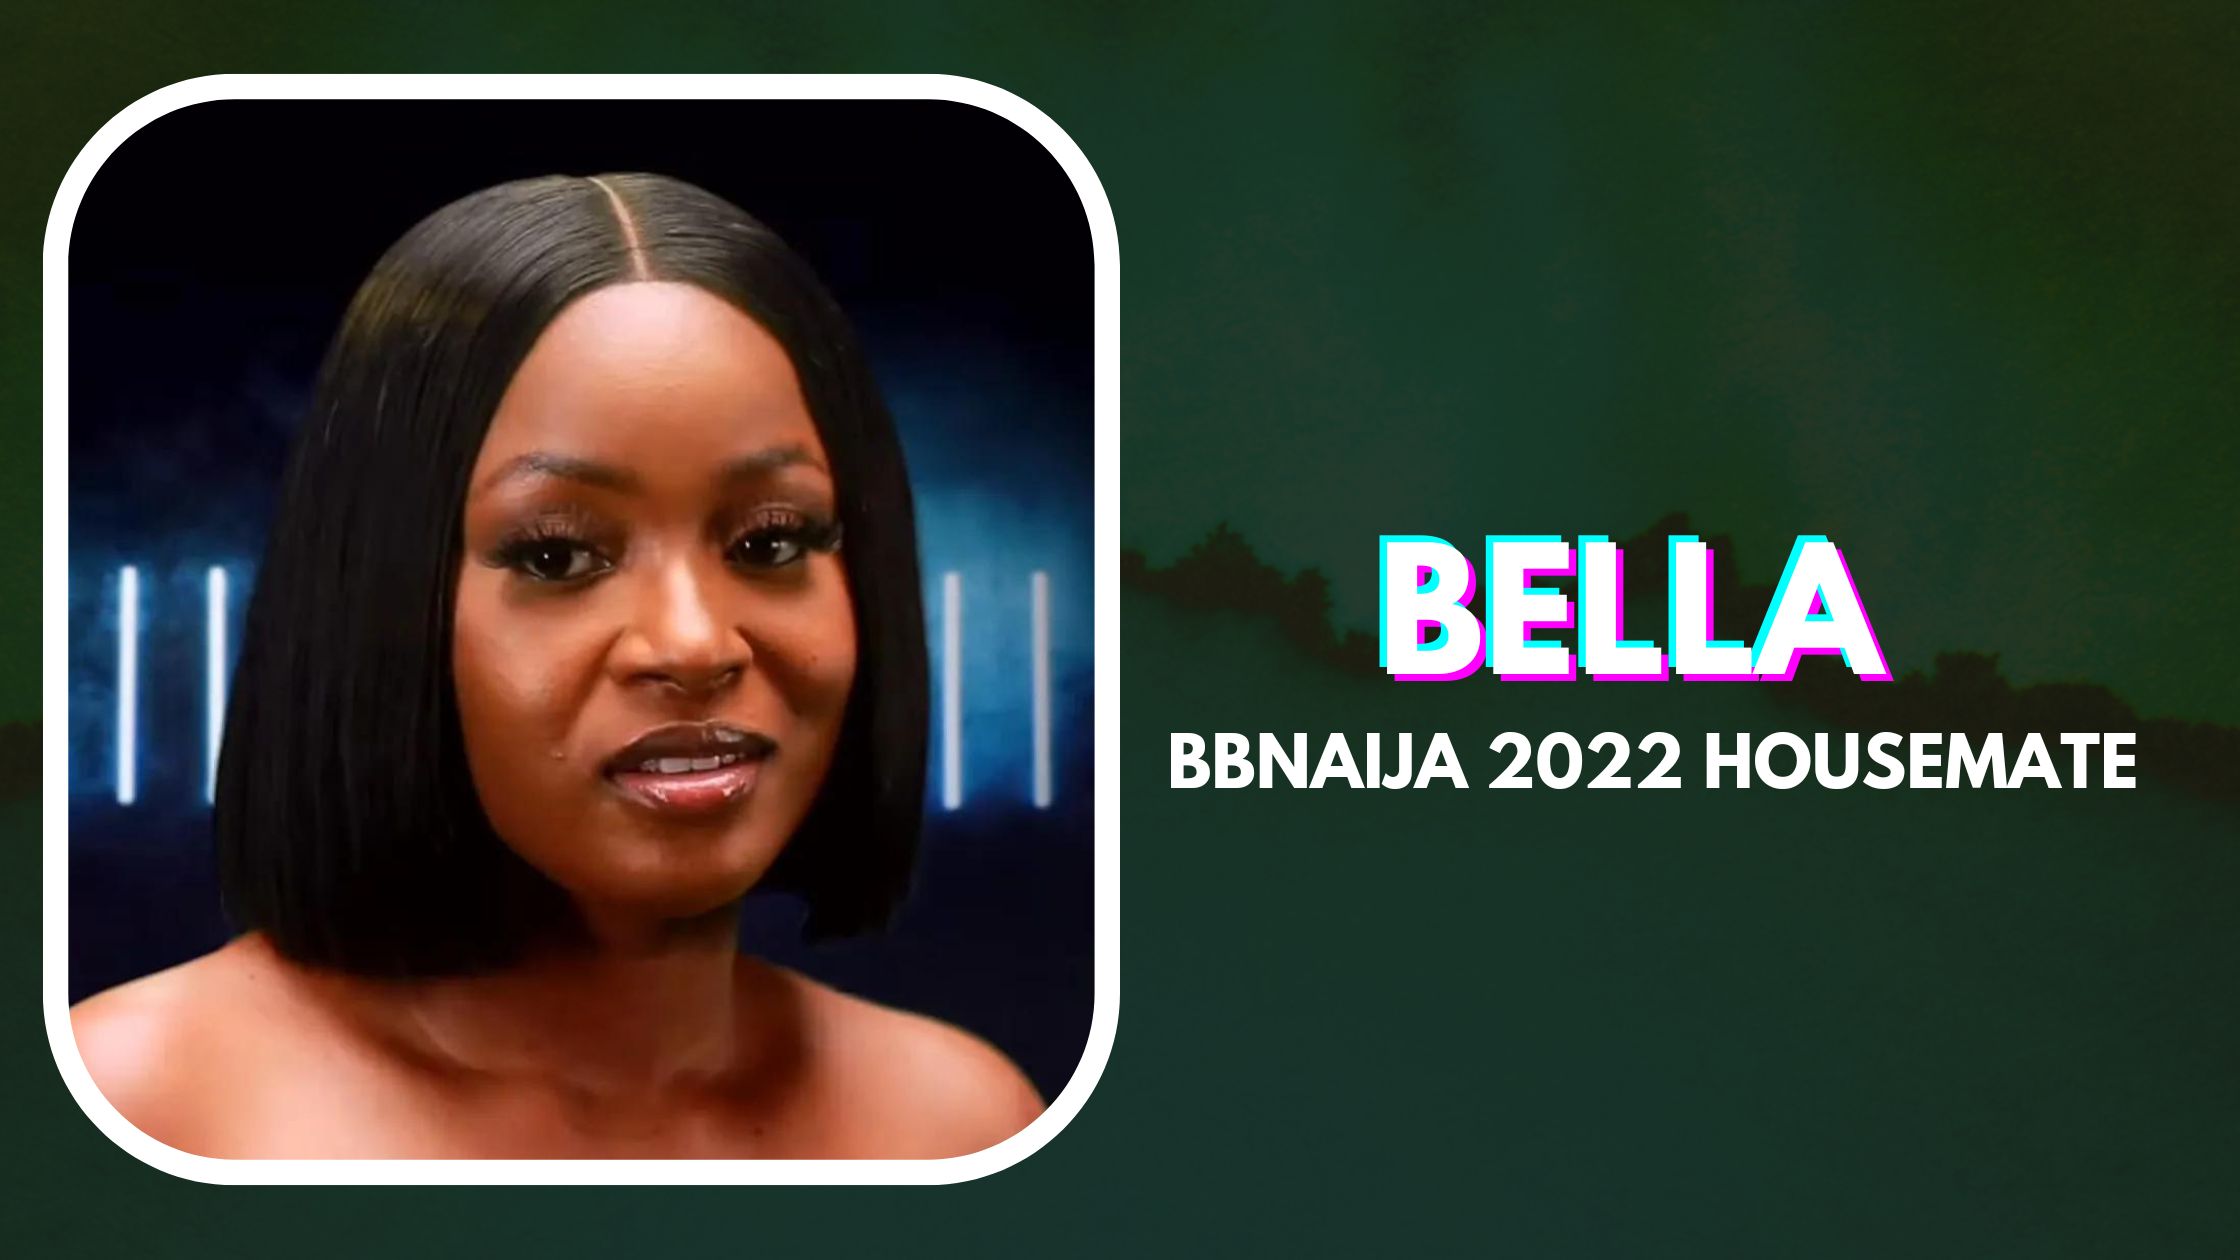 Meet Bella, a 2022 BBNaija Housemate